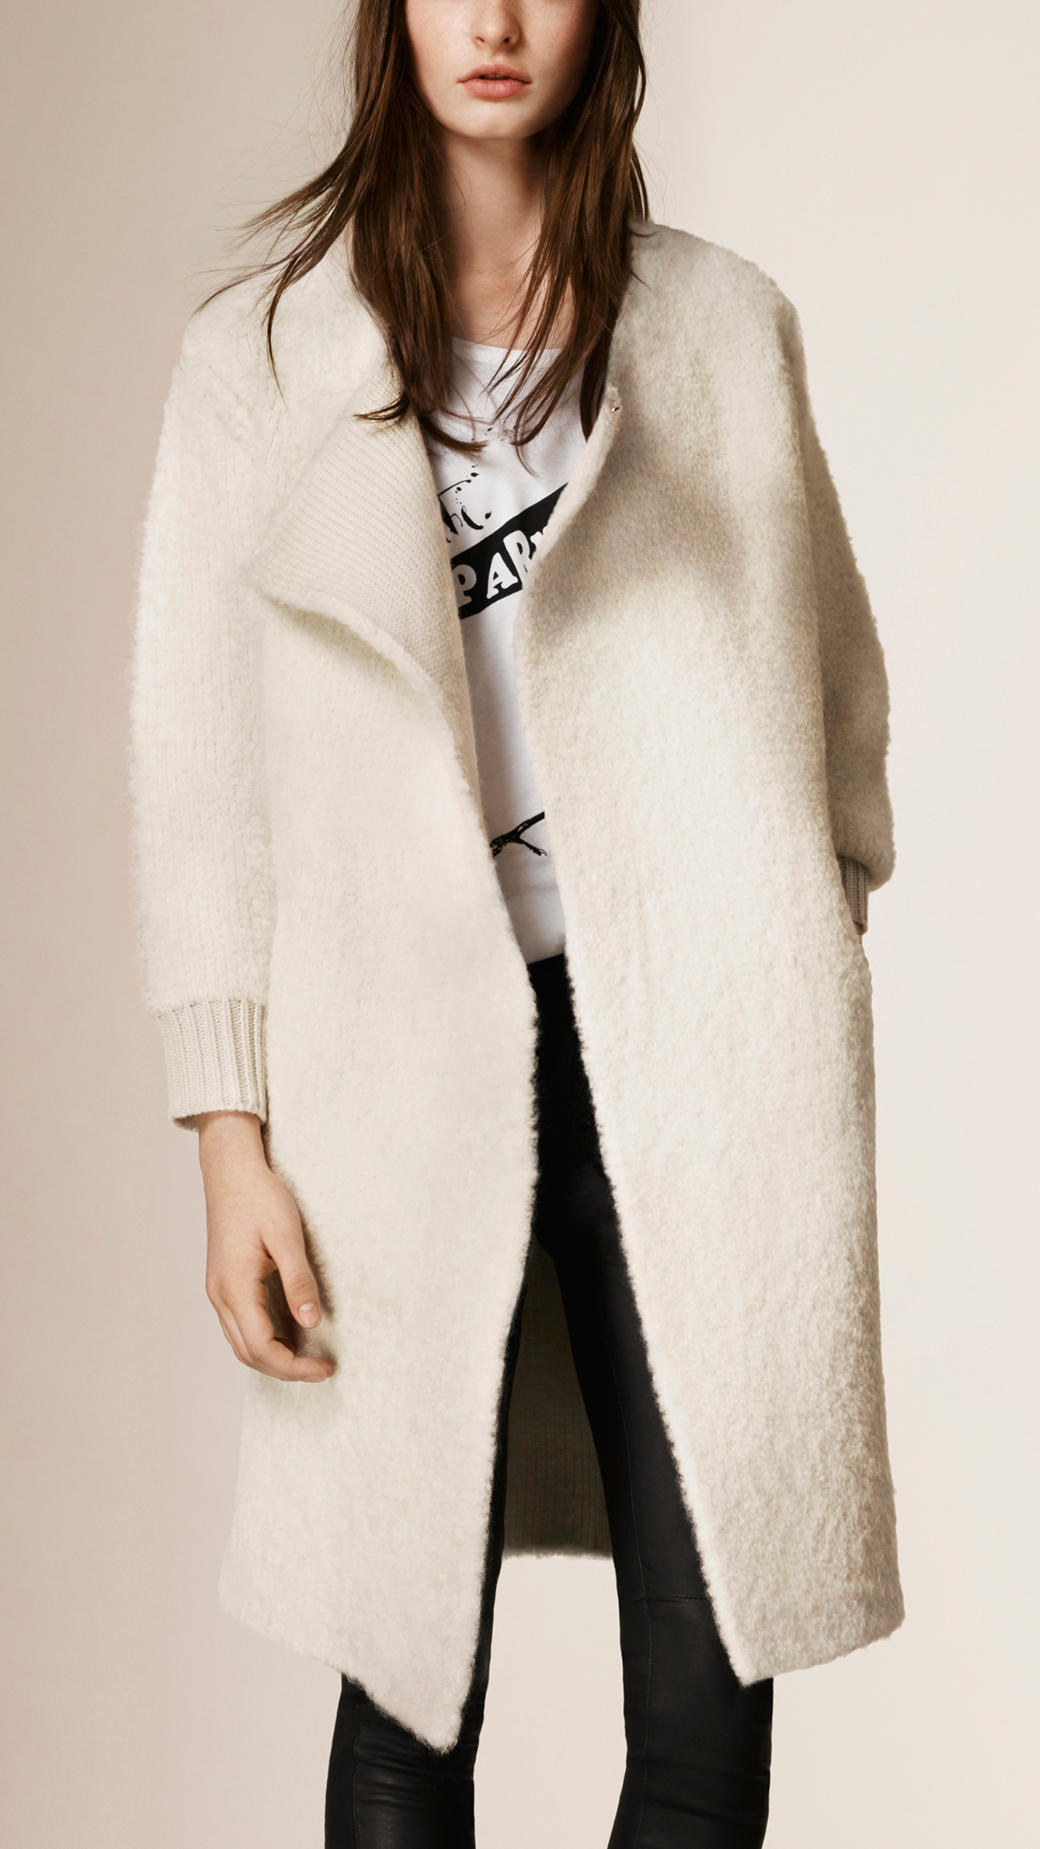 Burberry Wool Alpaca Cashmere Cardigan Coat in Natural - Lyst